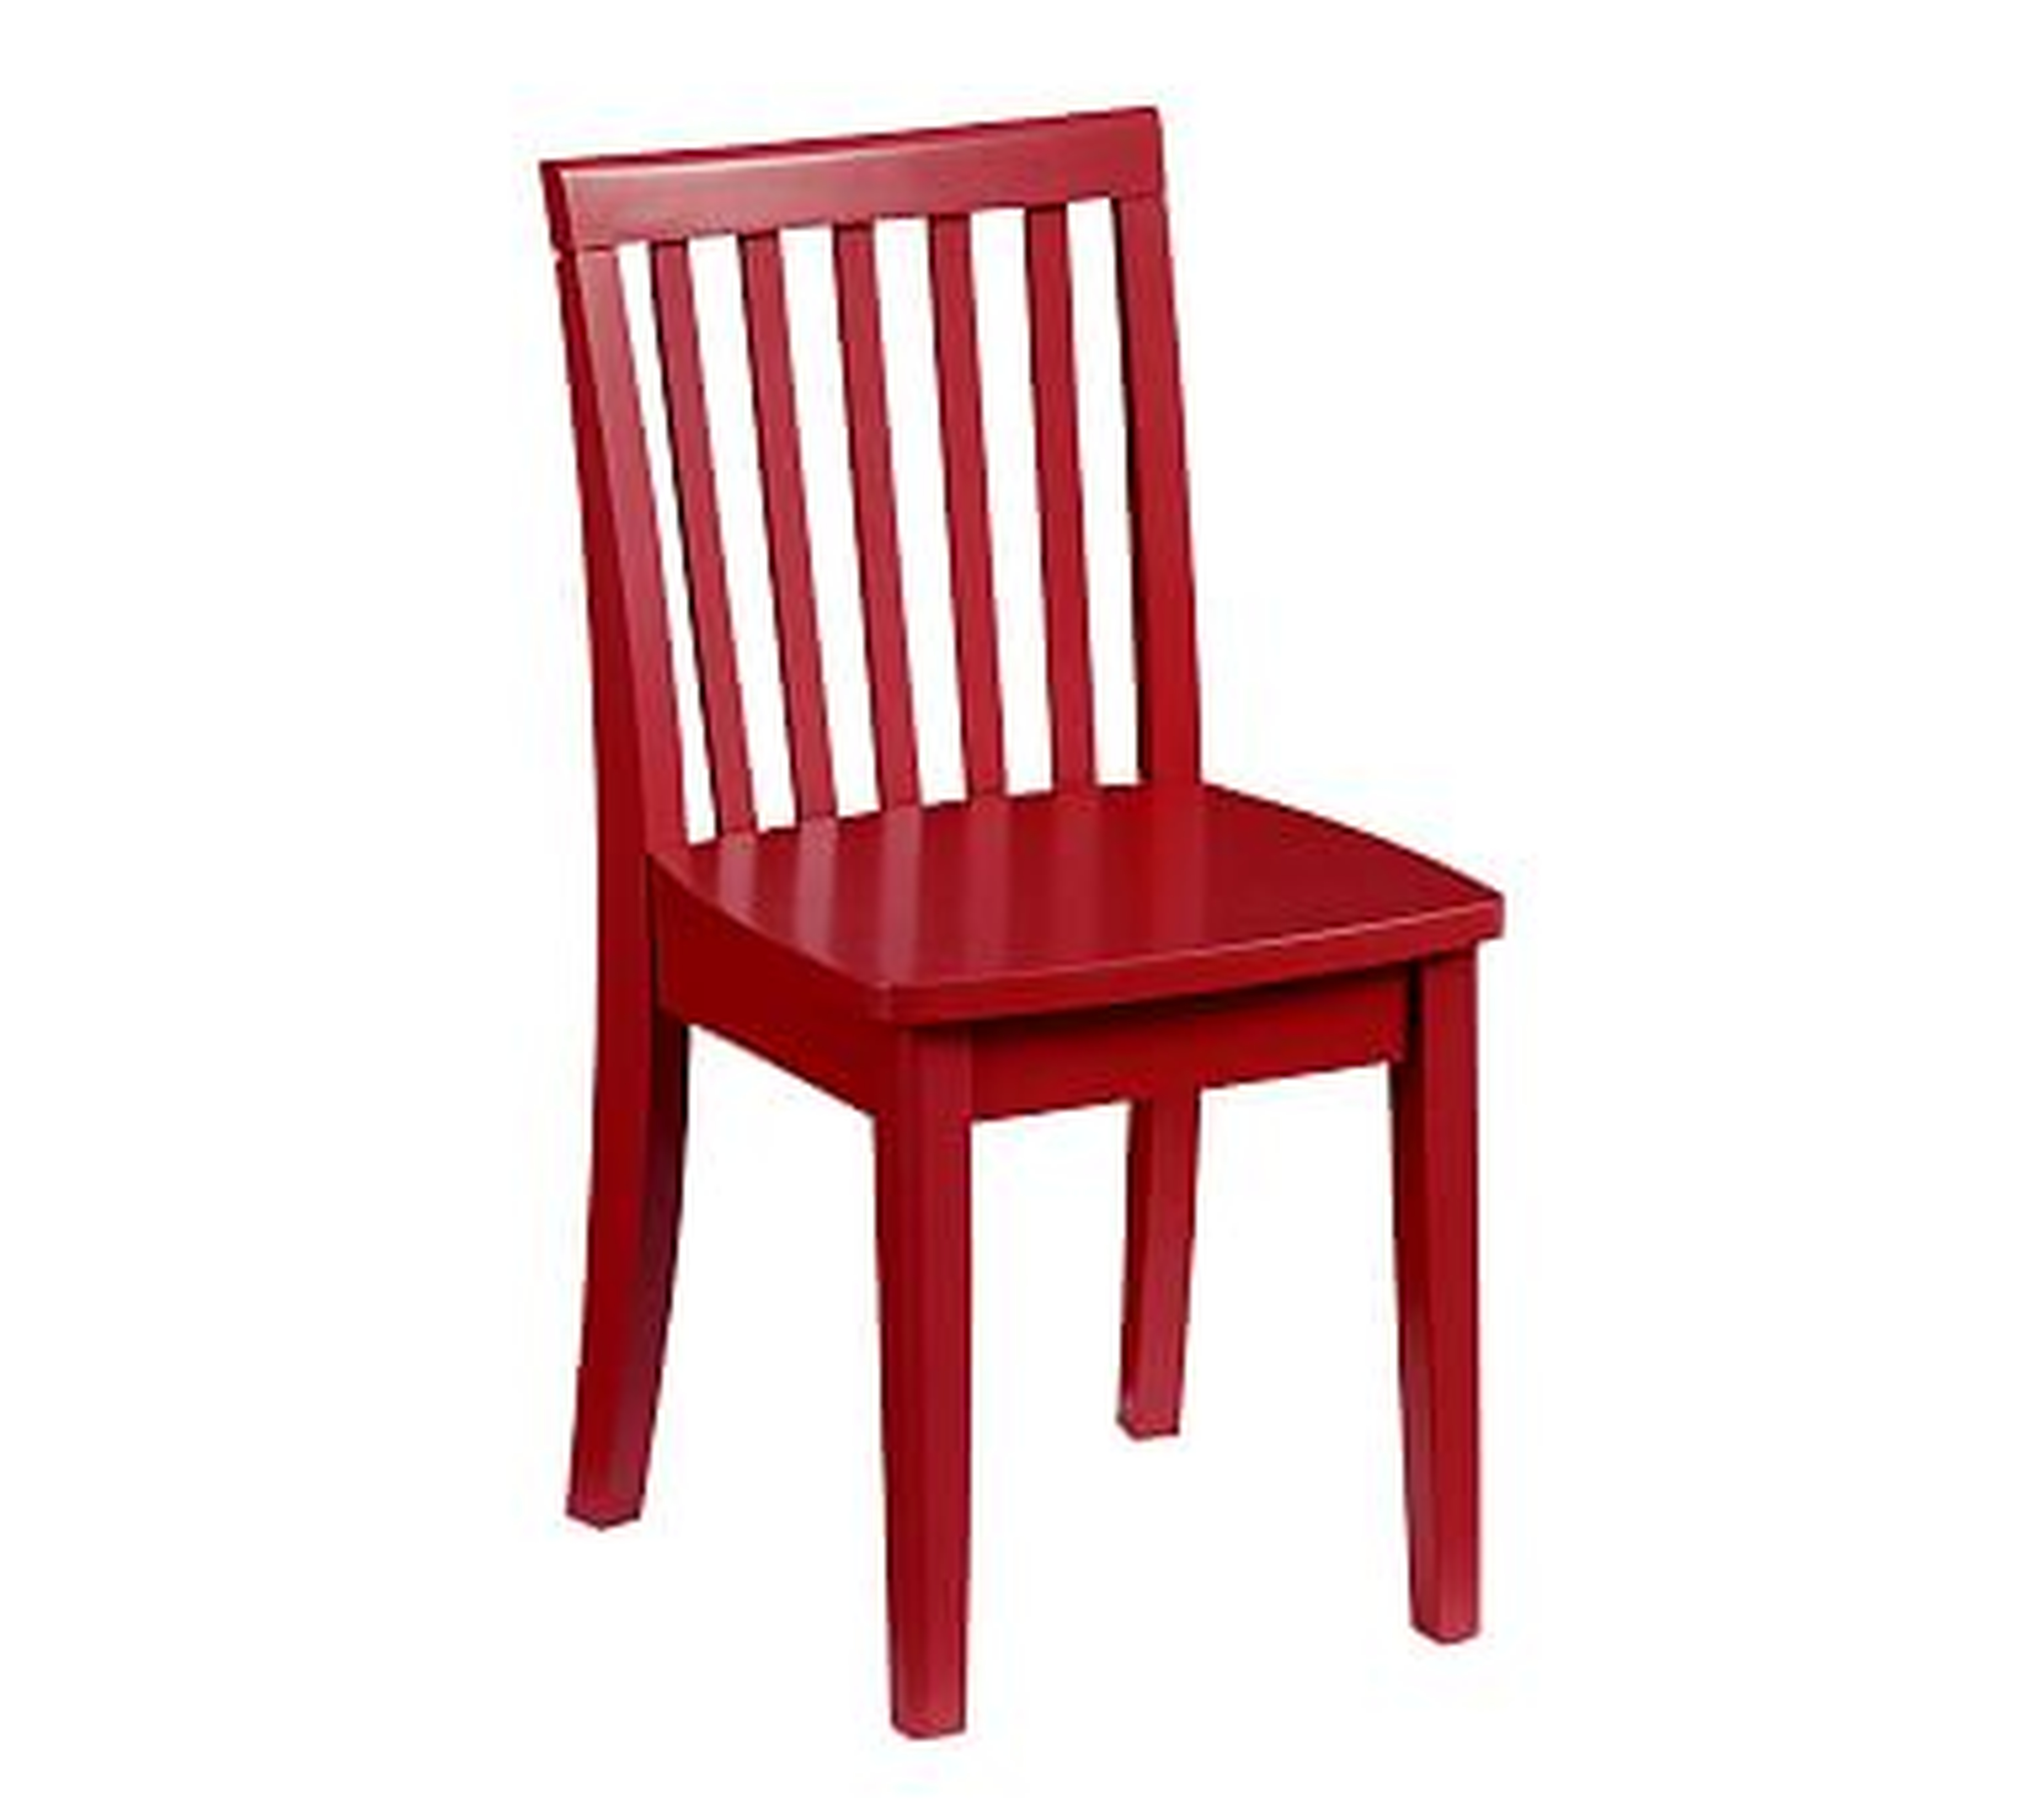 Carolina Kids Chair, Retro Red, 1 chair - Pottery Barn Kids